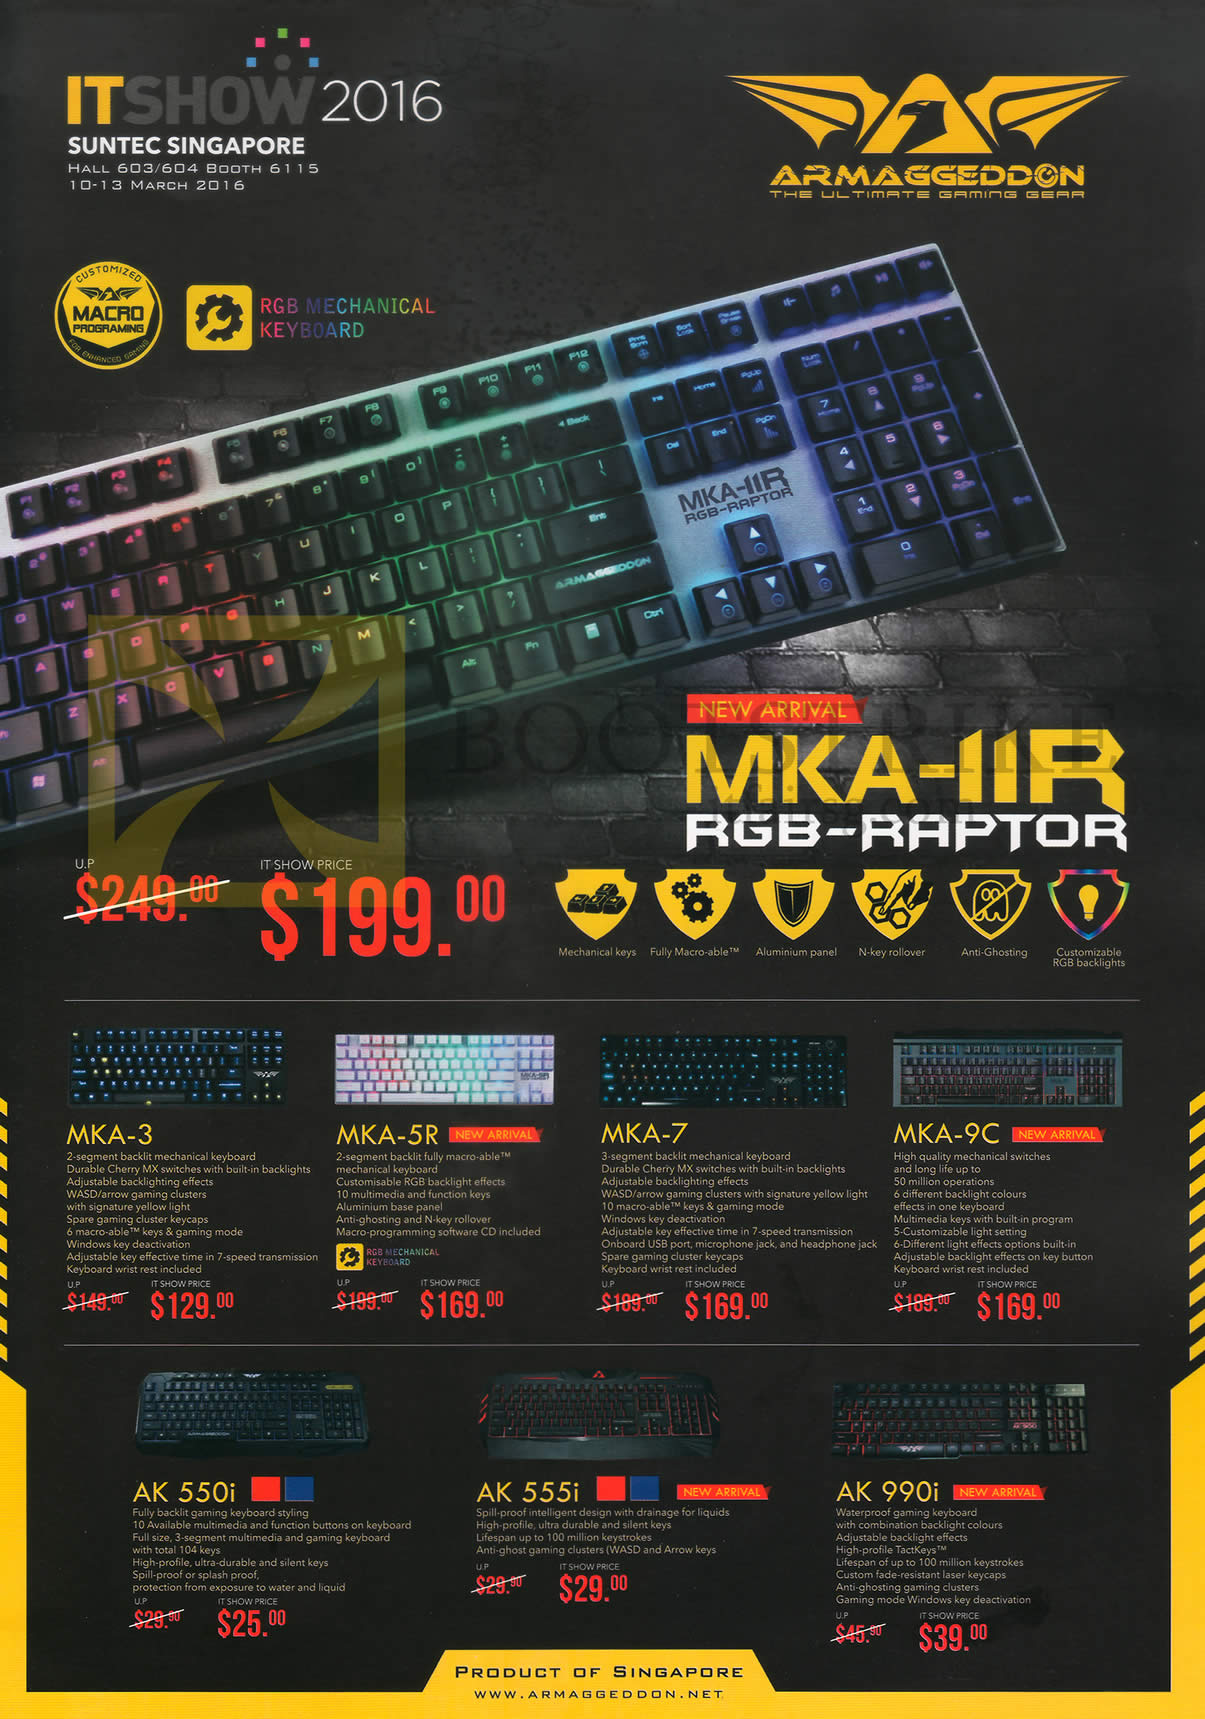 IT SHOW 2016 price list image brochure of Armageddon Keyboards Mechanical MKA-IIR MKA-3, MKA-5R, MKA-7, MKA-9C, AK 555i, AK990i